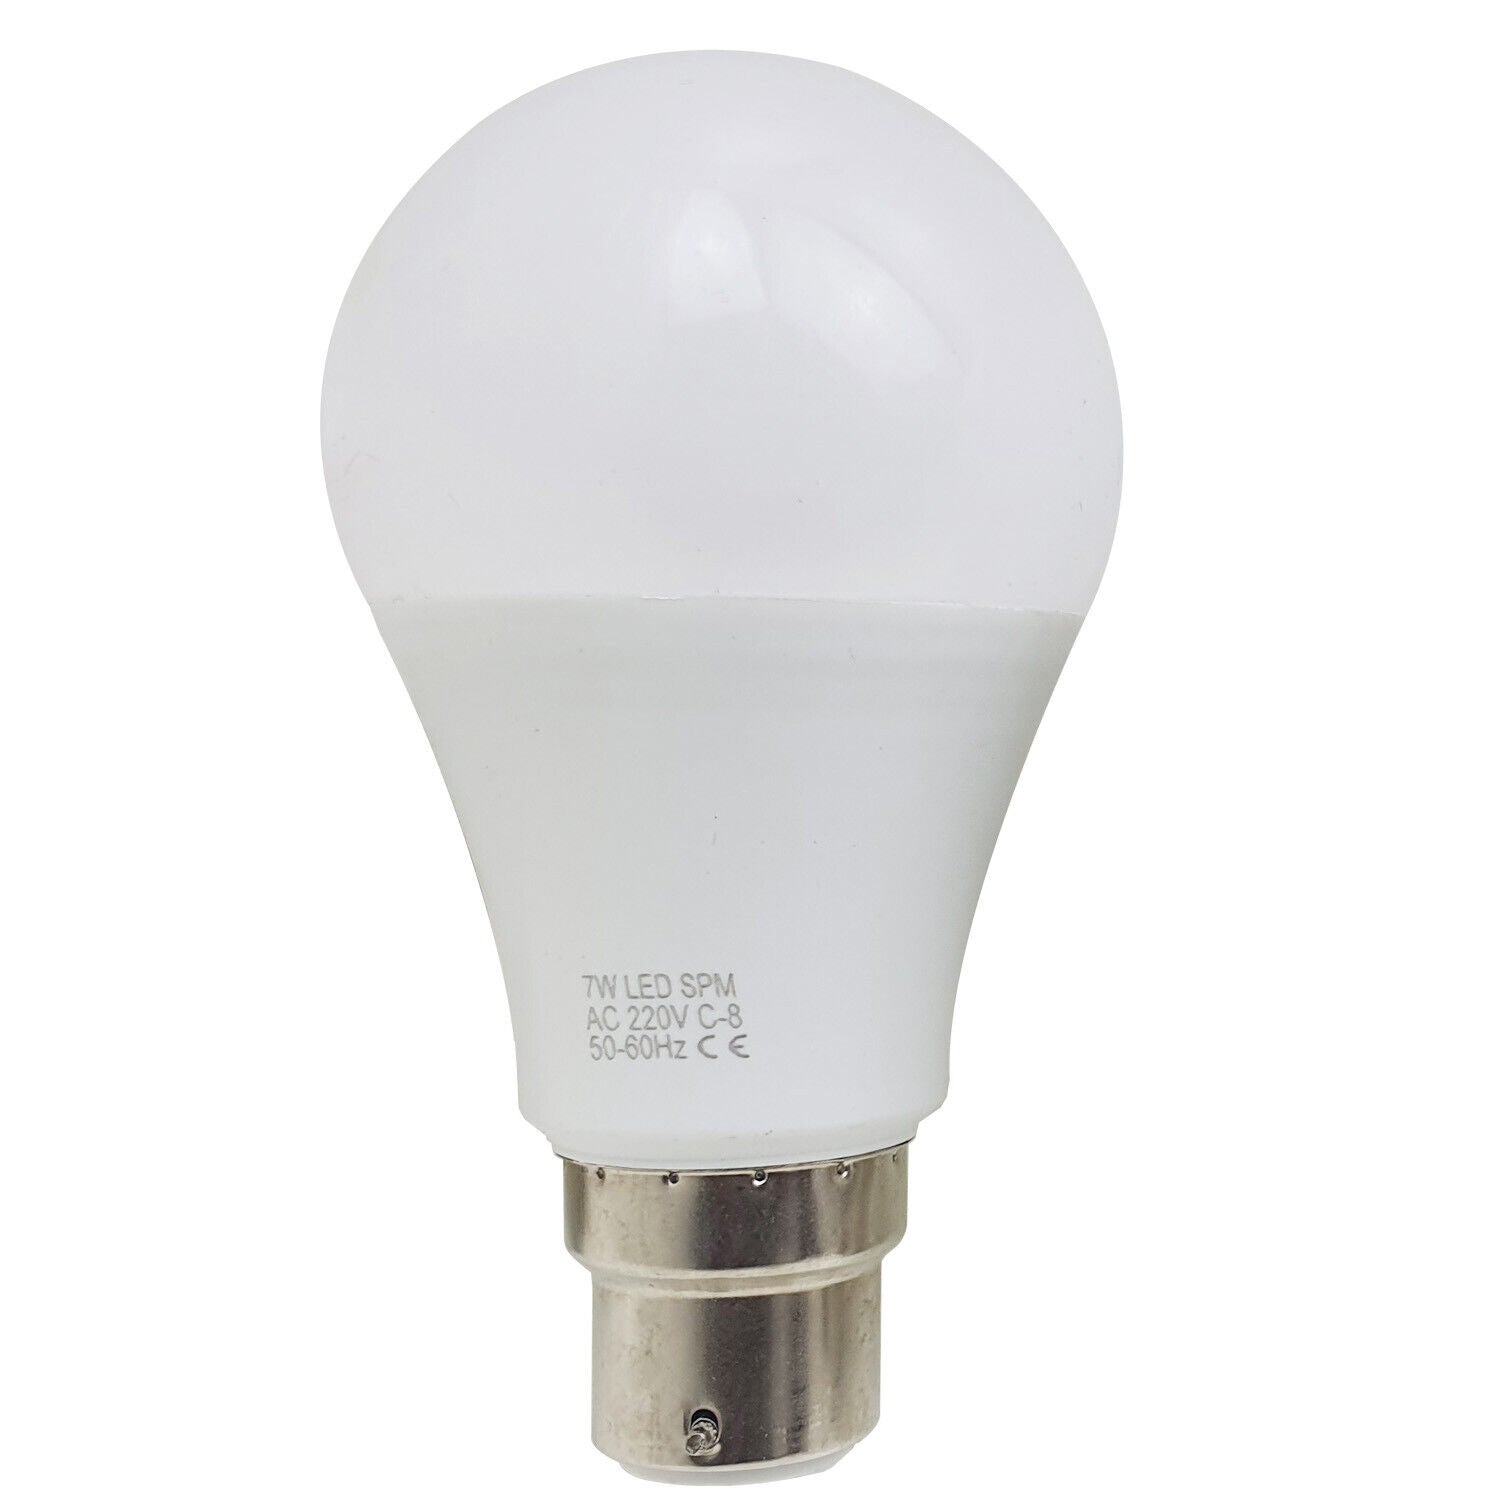 B22 7W Energy Saving Warm White LED Light Bulbs A60 B22 Screw-in non dimmable bulbs